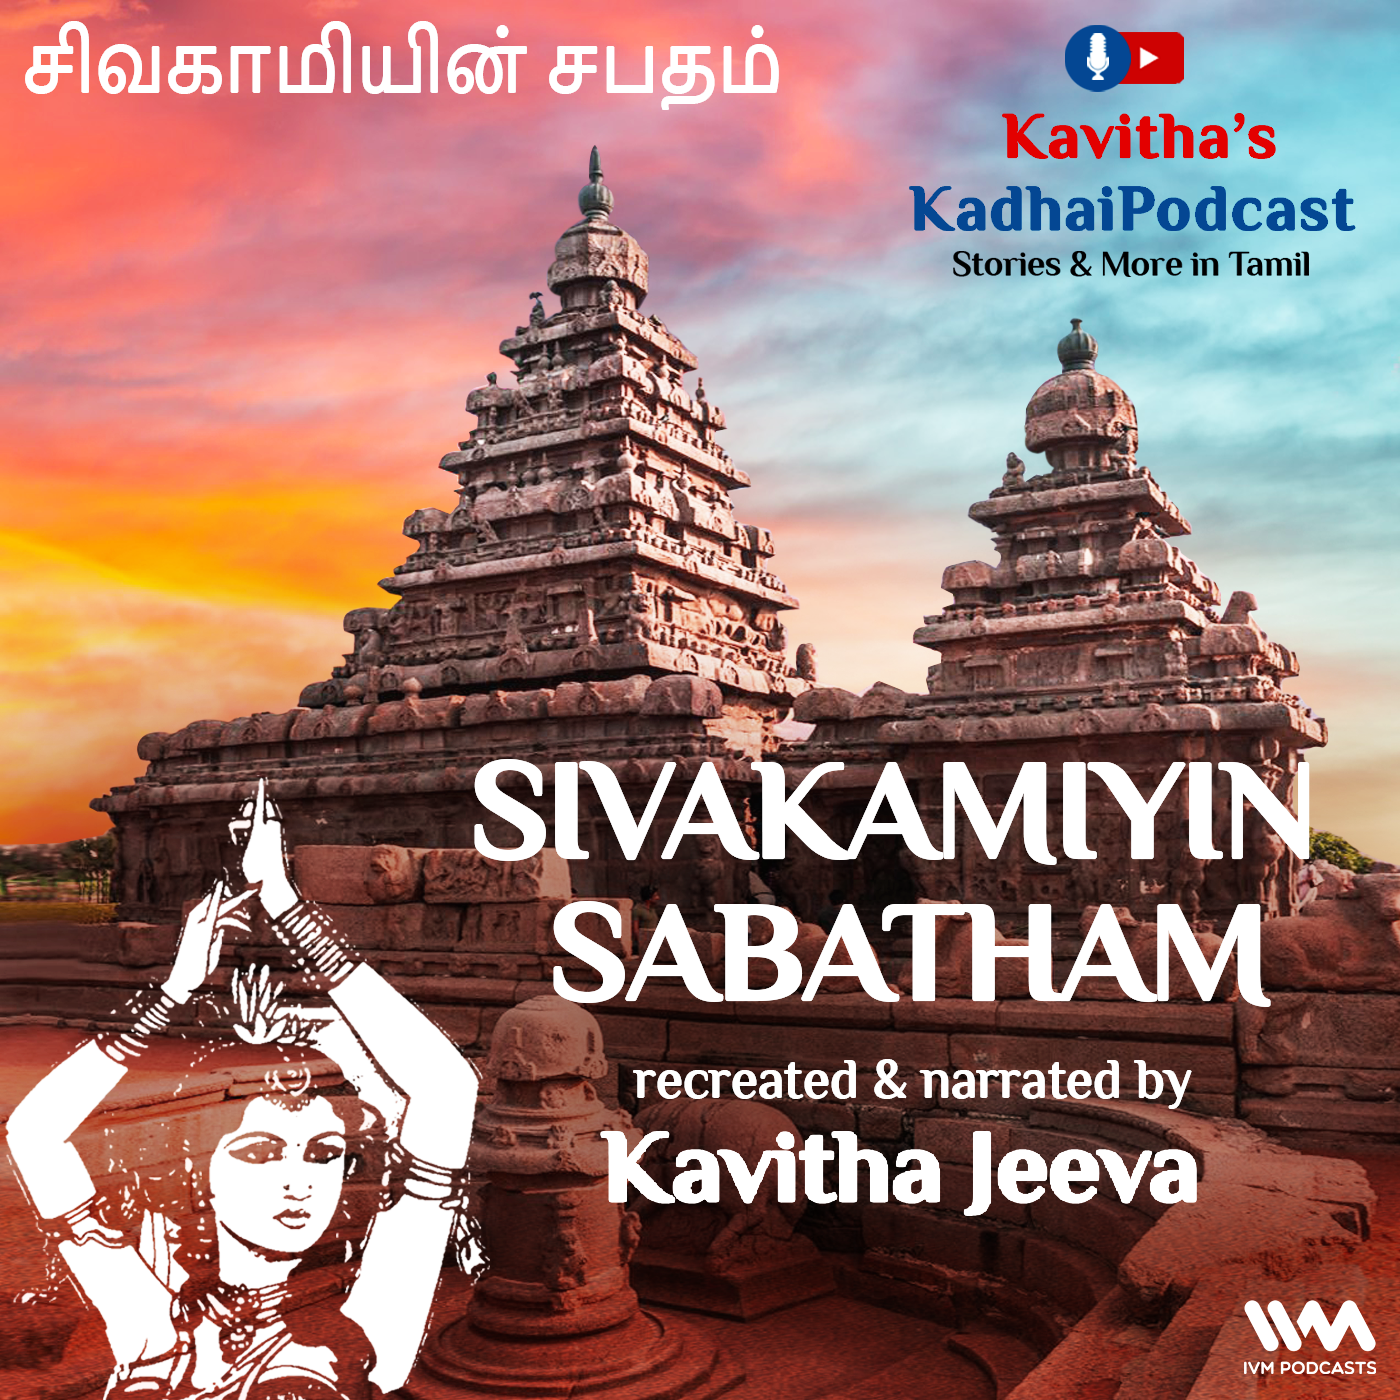 KadhaiPodcast's Sivakamiyin Sabatham - Episode # 5